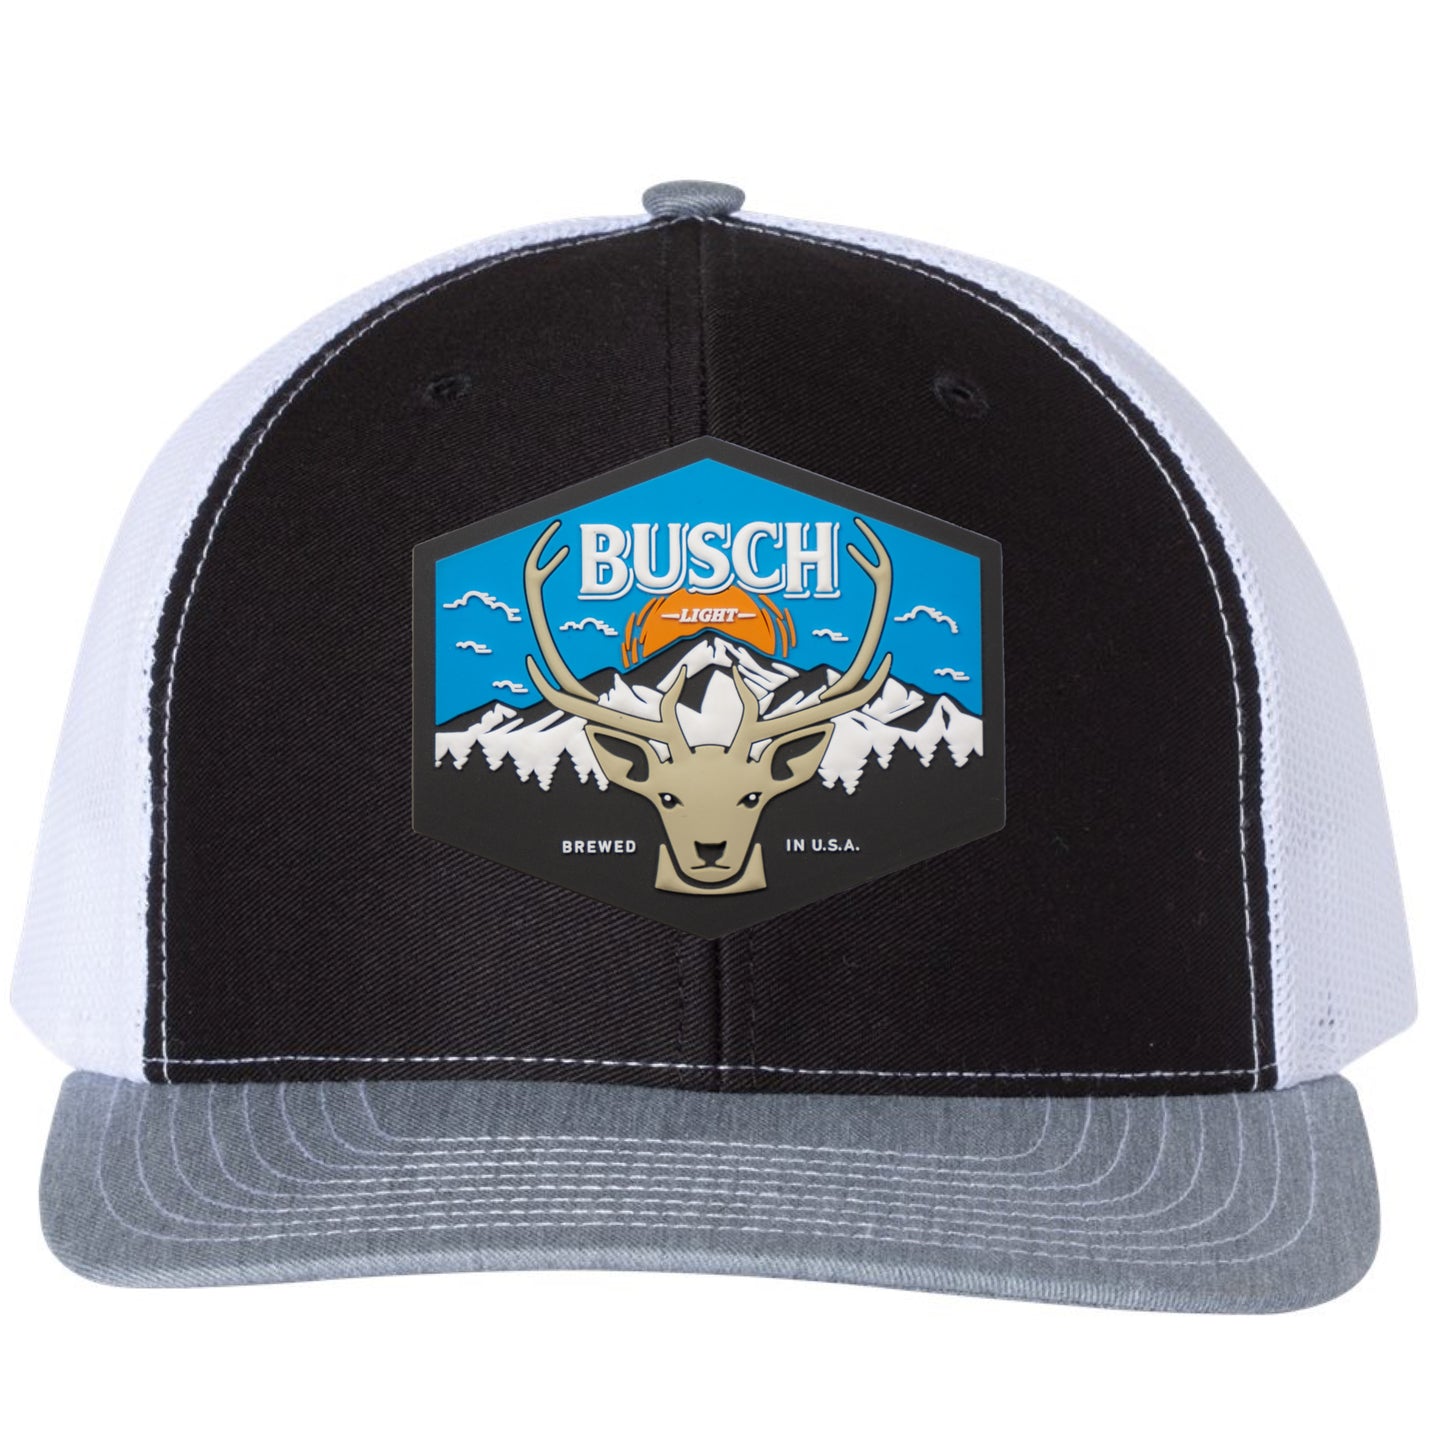 Busch Light Mountain Escape 3D Snapback Trucker Hat- Black/ White/ Heather Grey - Ten Gallon Hat Co.